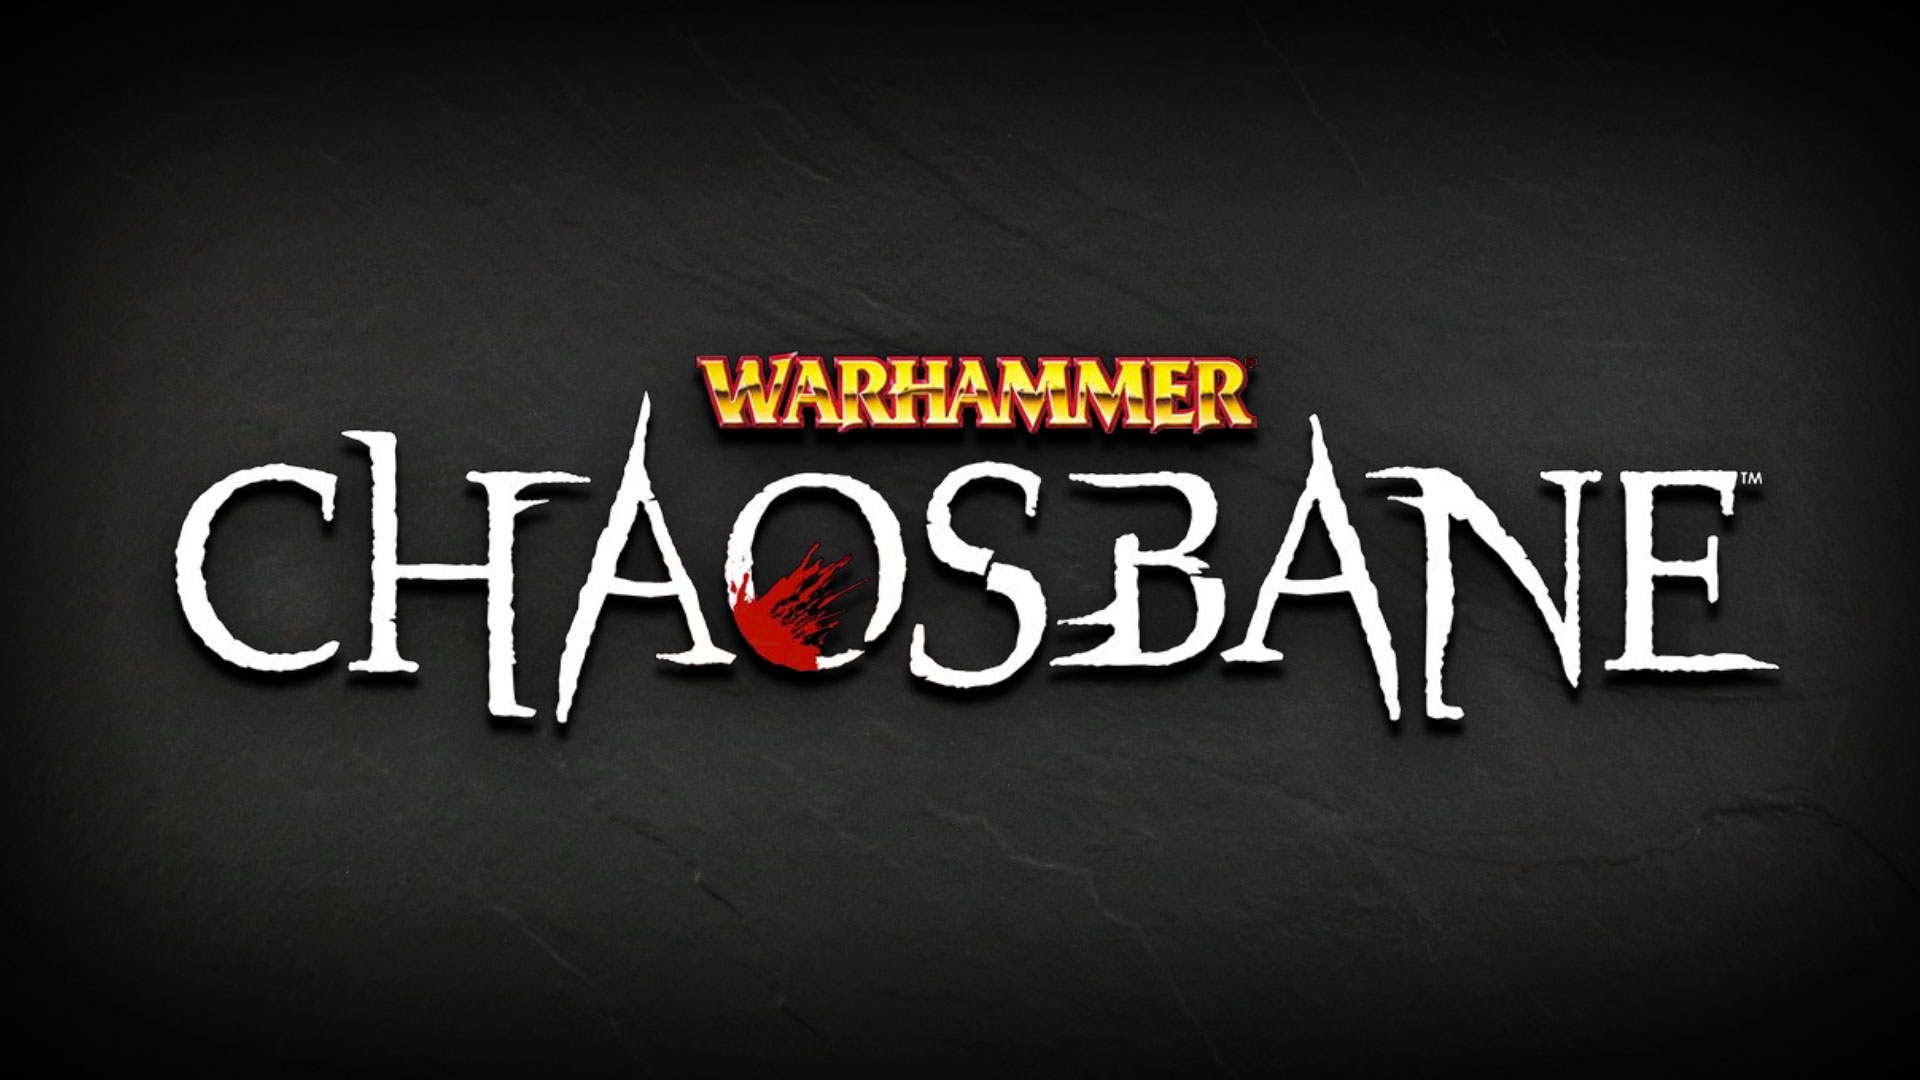 Warhammer Chaosbane Beta PC